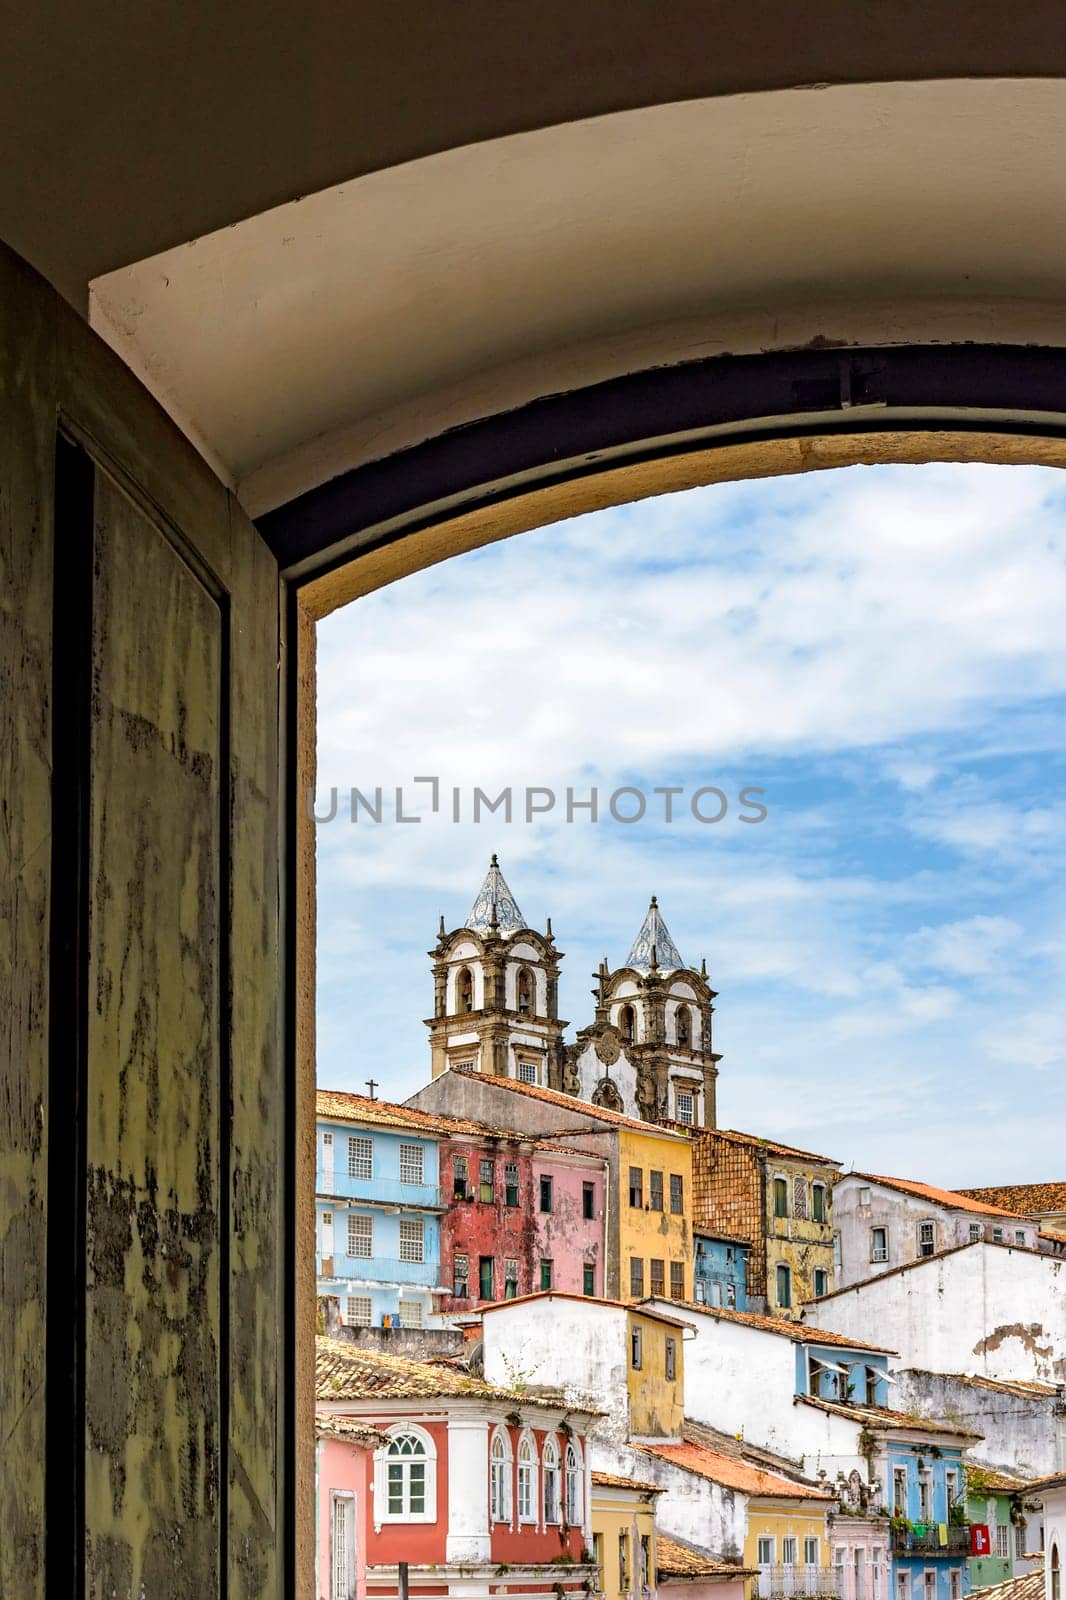 View of the famous Pelourinho neighborhood in the city of Salvador by Fred_Pinheiro